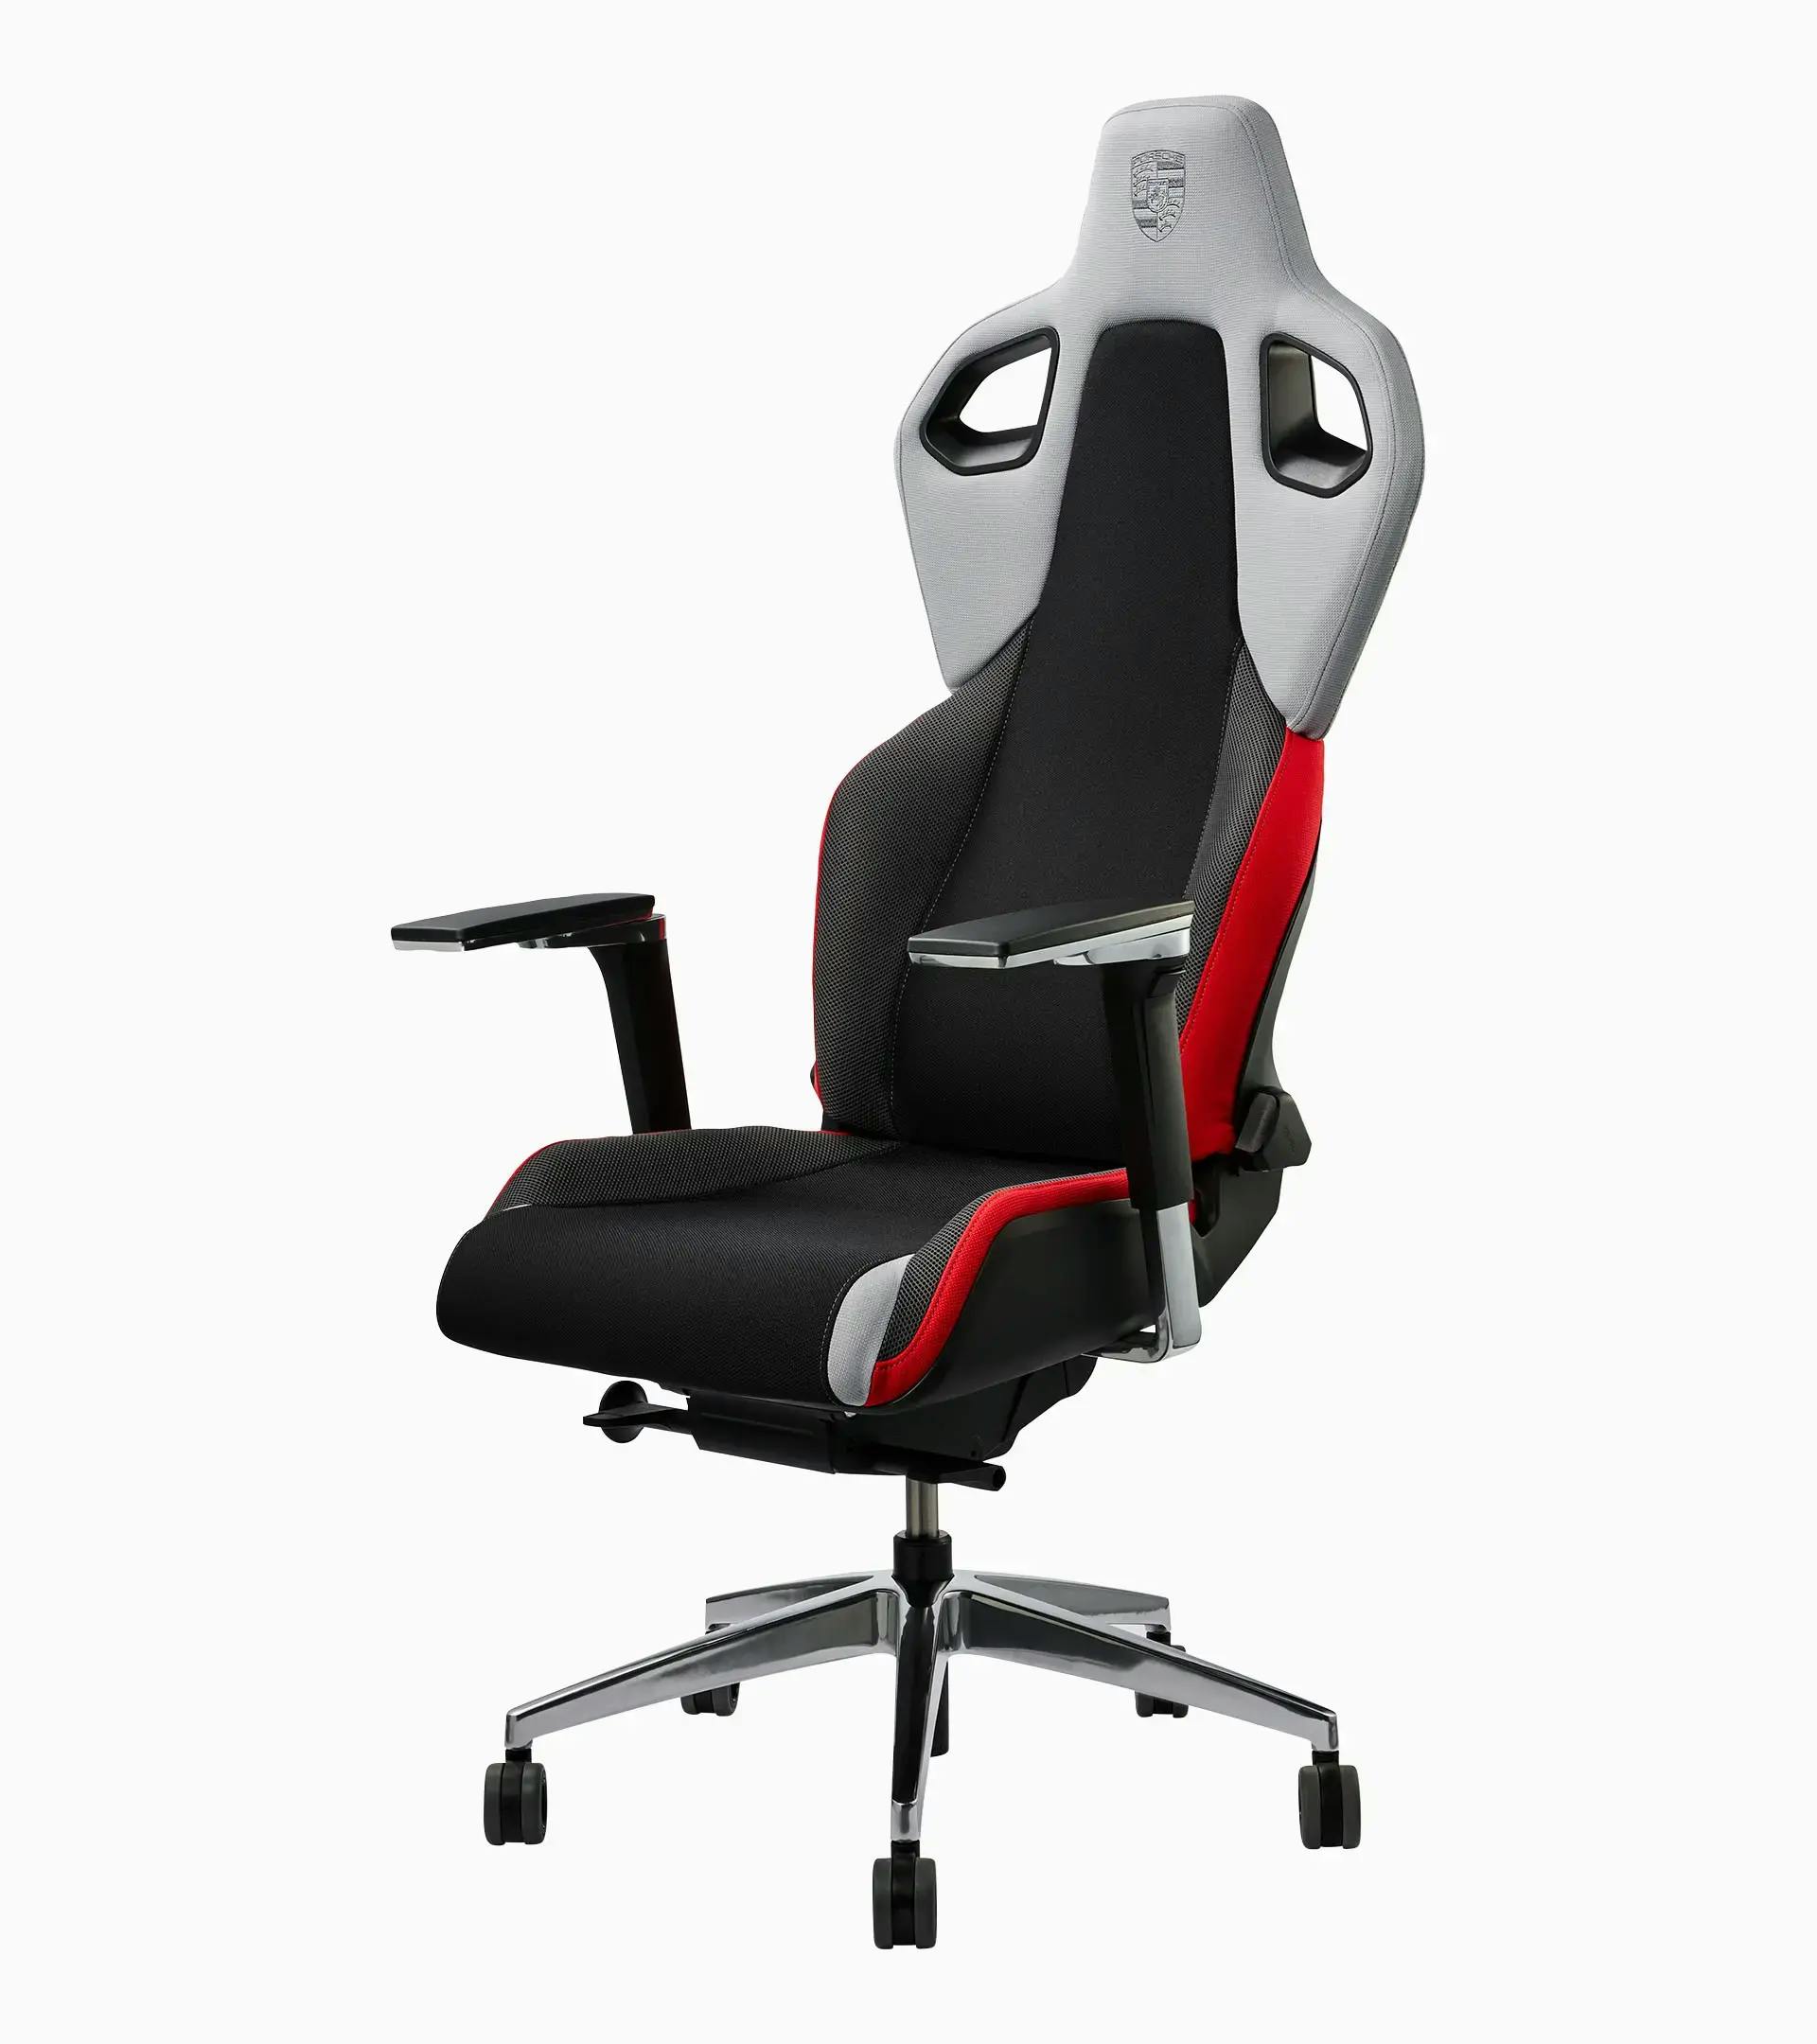 RECARO x Porsche Gaming Chair Limited Edition thumbnail 1